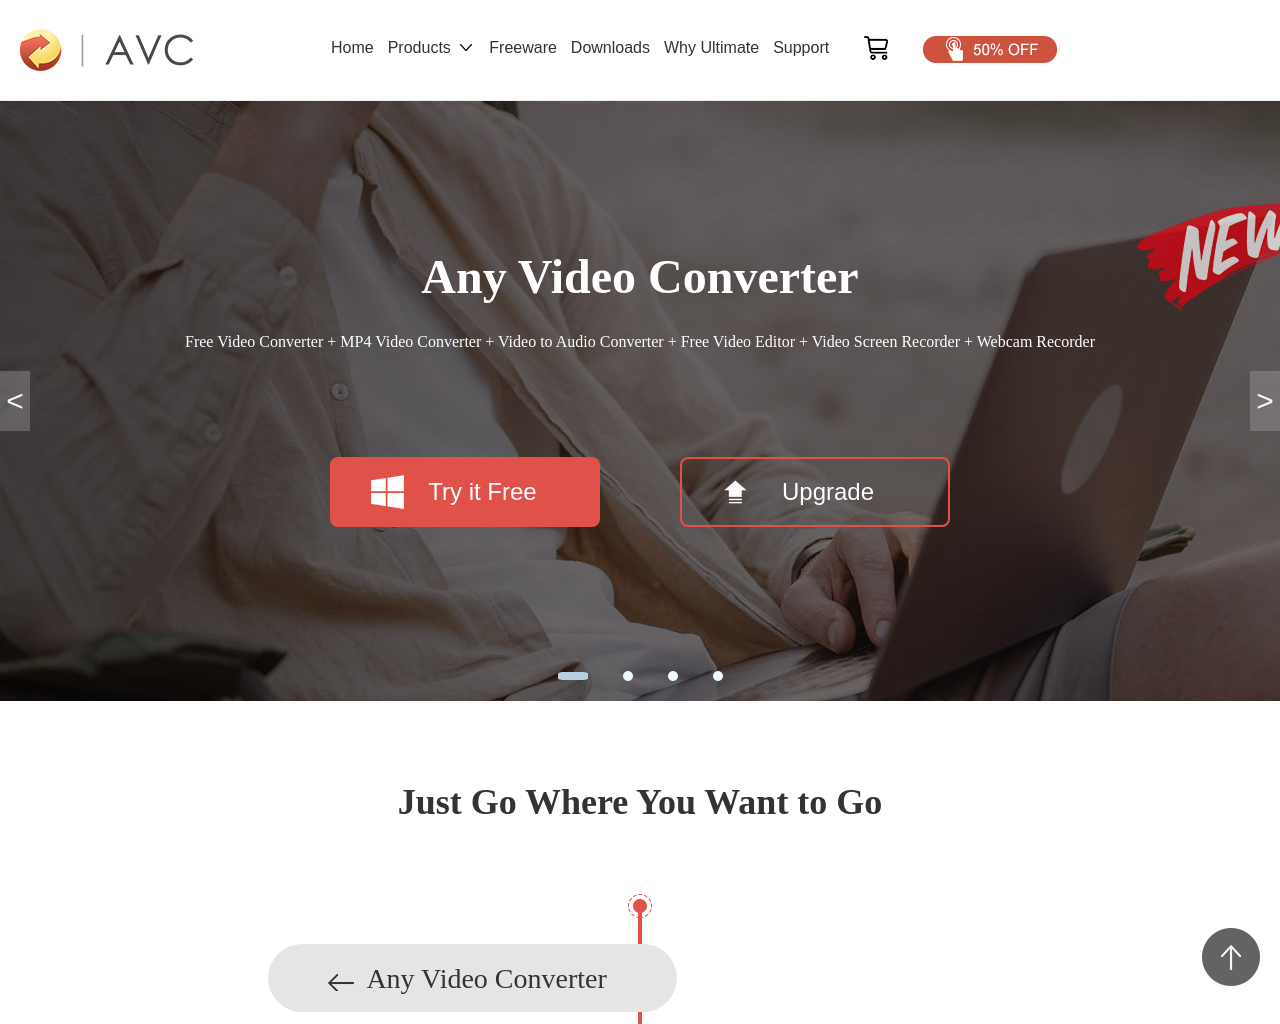 www.any-video-converter.com